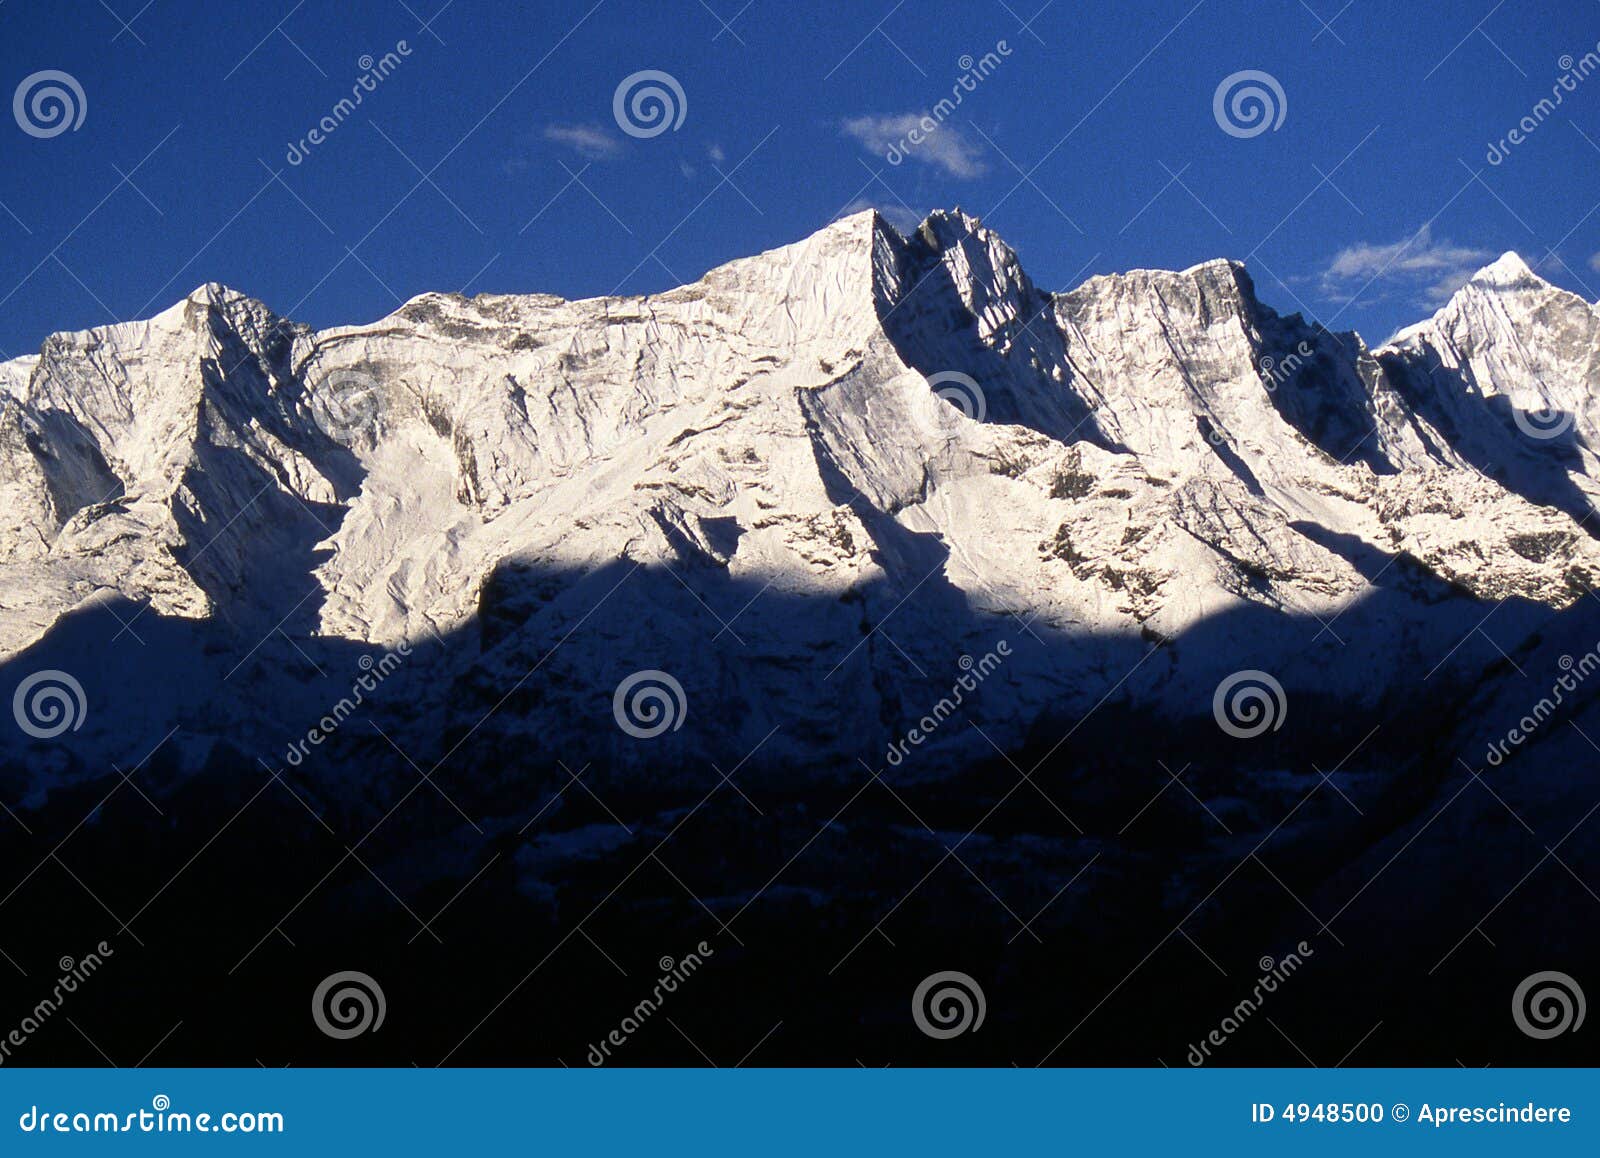 taboche ridge - himalaya